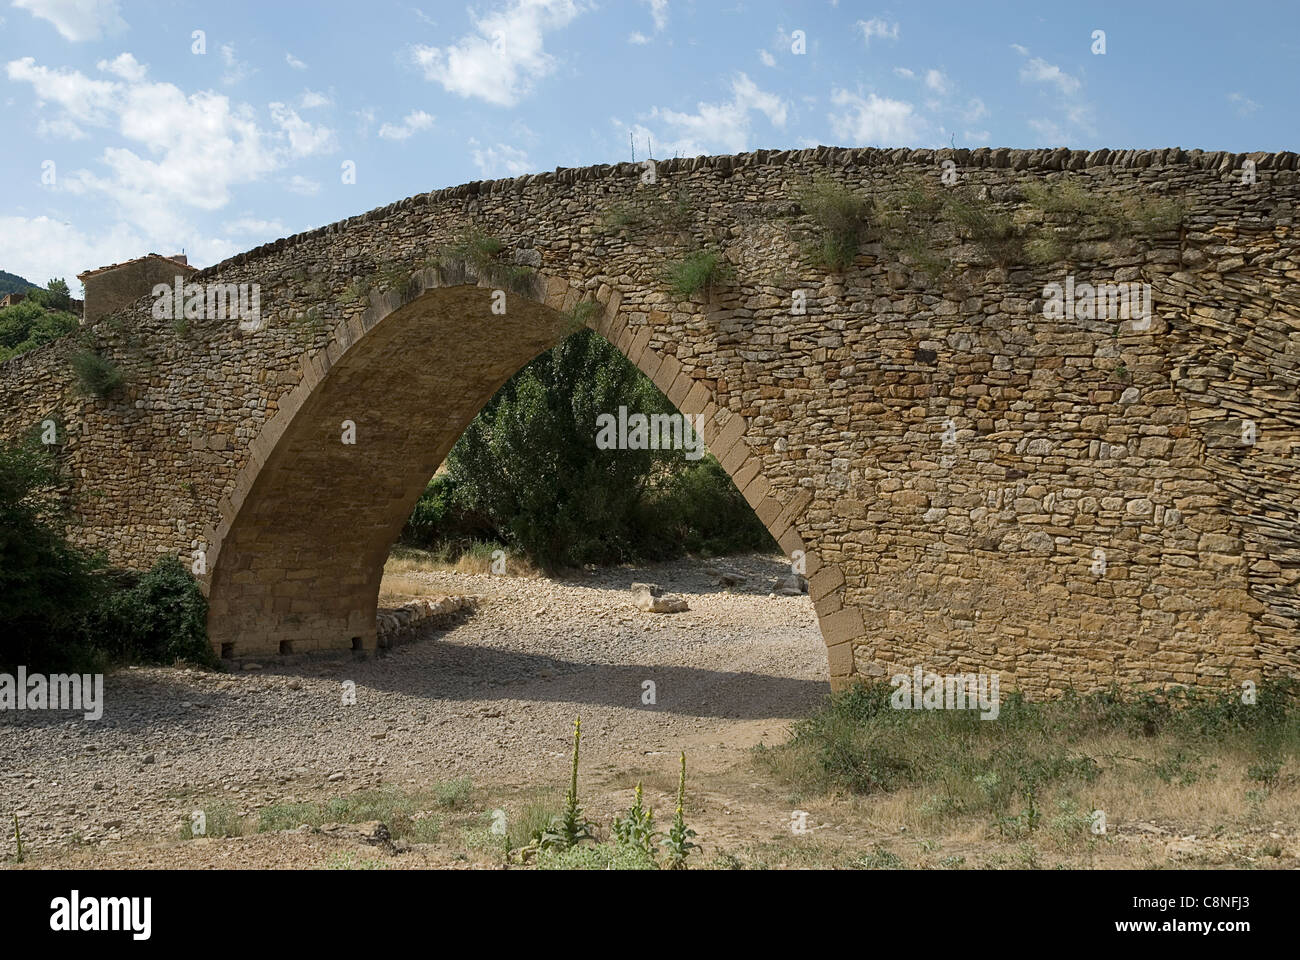 Spain, Maestrazgo, Puente de Pobleta, Old stone bridge Stock Photo